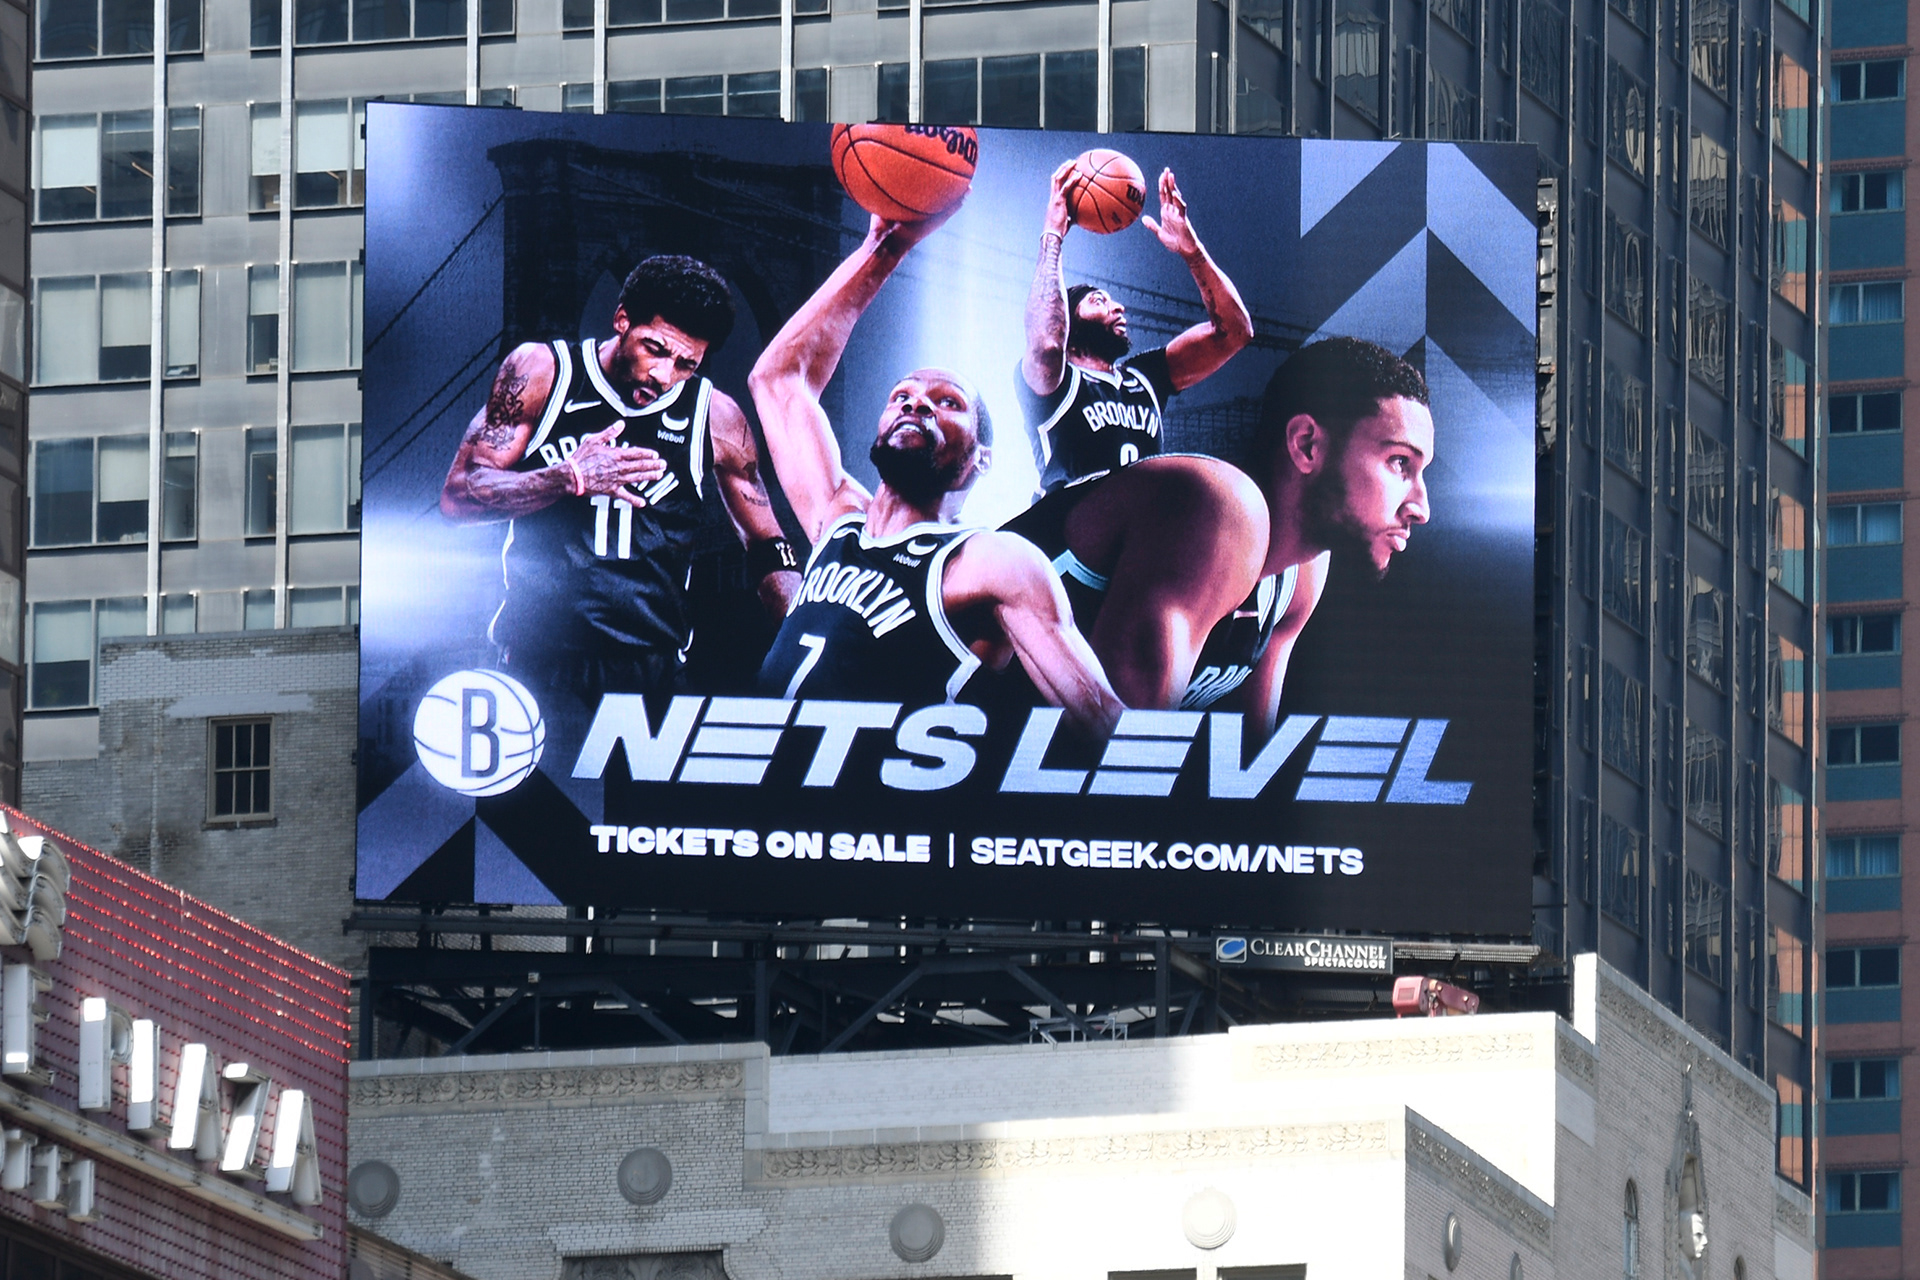 Jessie Kavana Nets Level 2022 Brooklyn Nets Playoffs